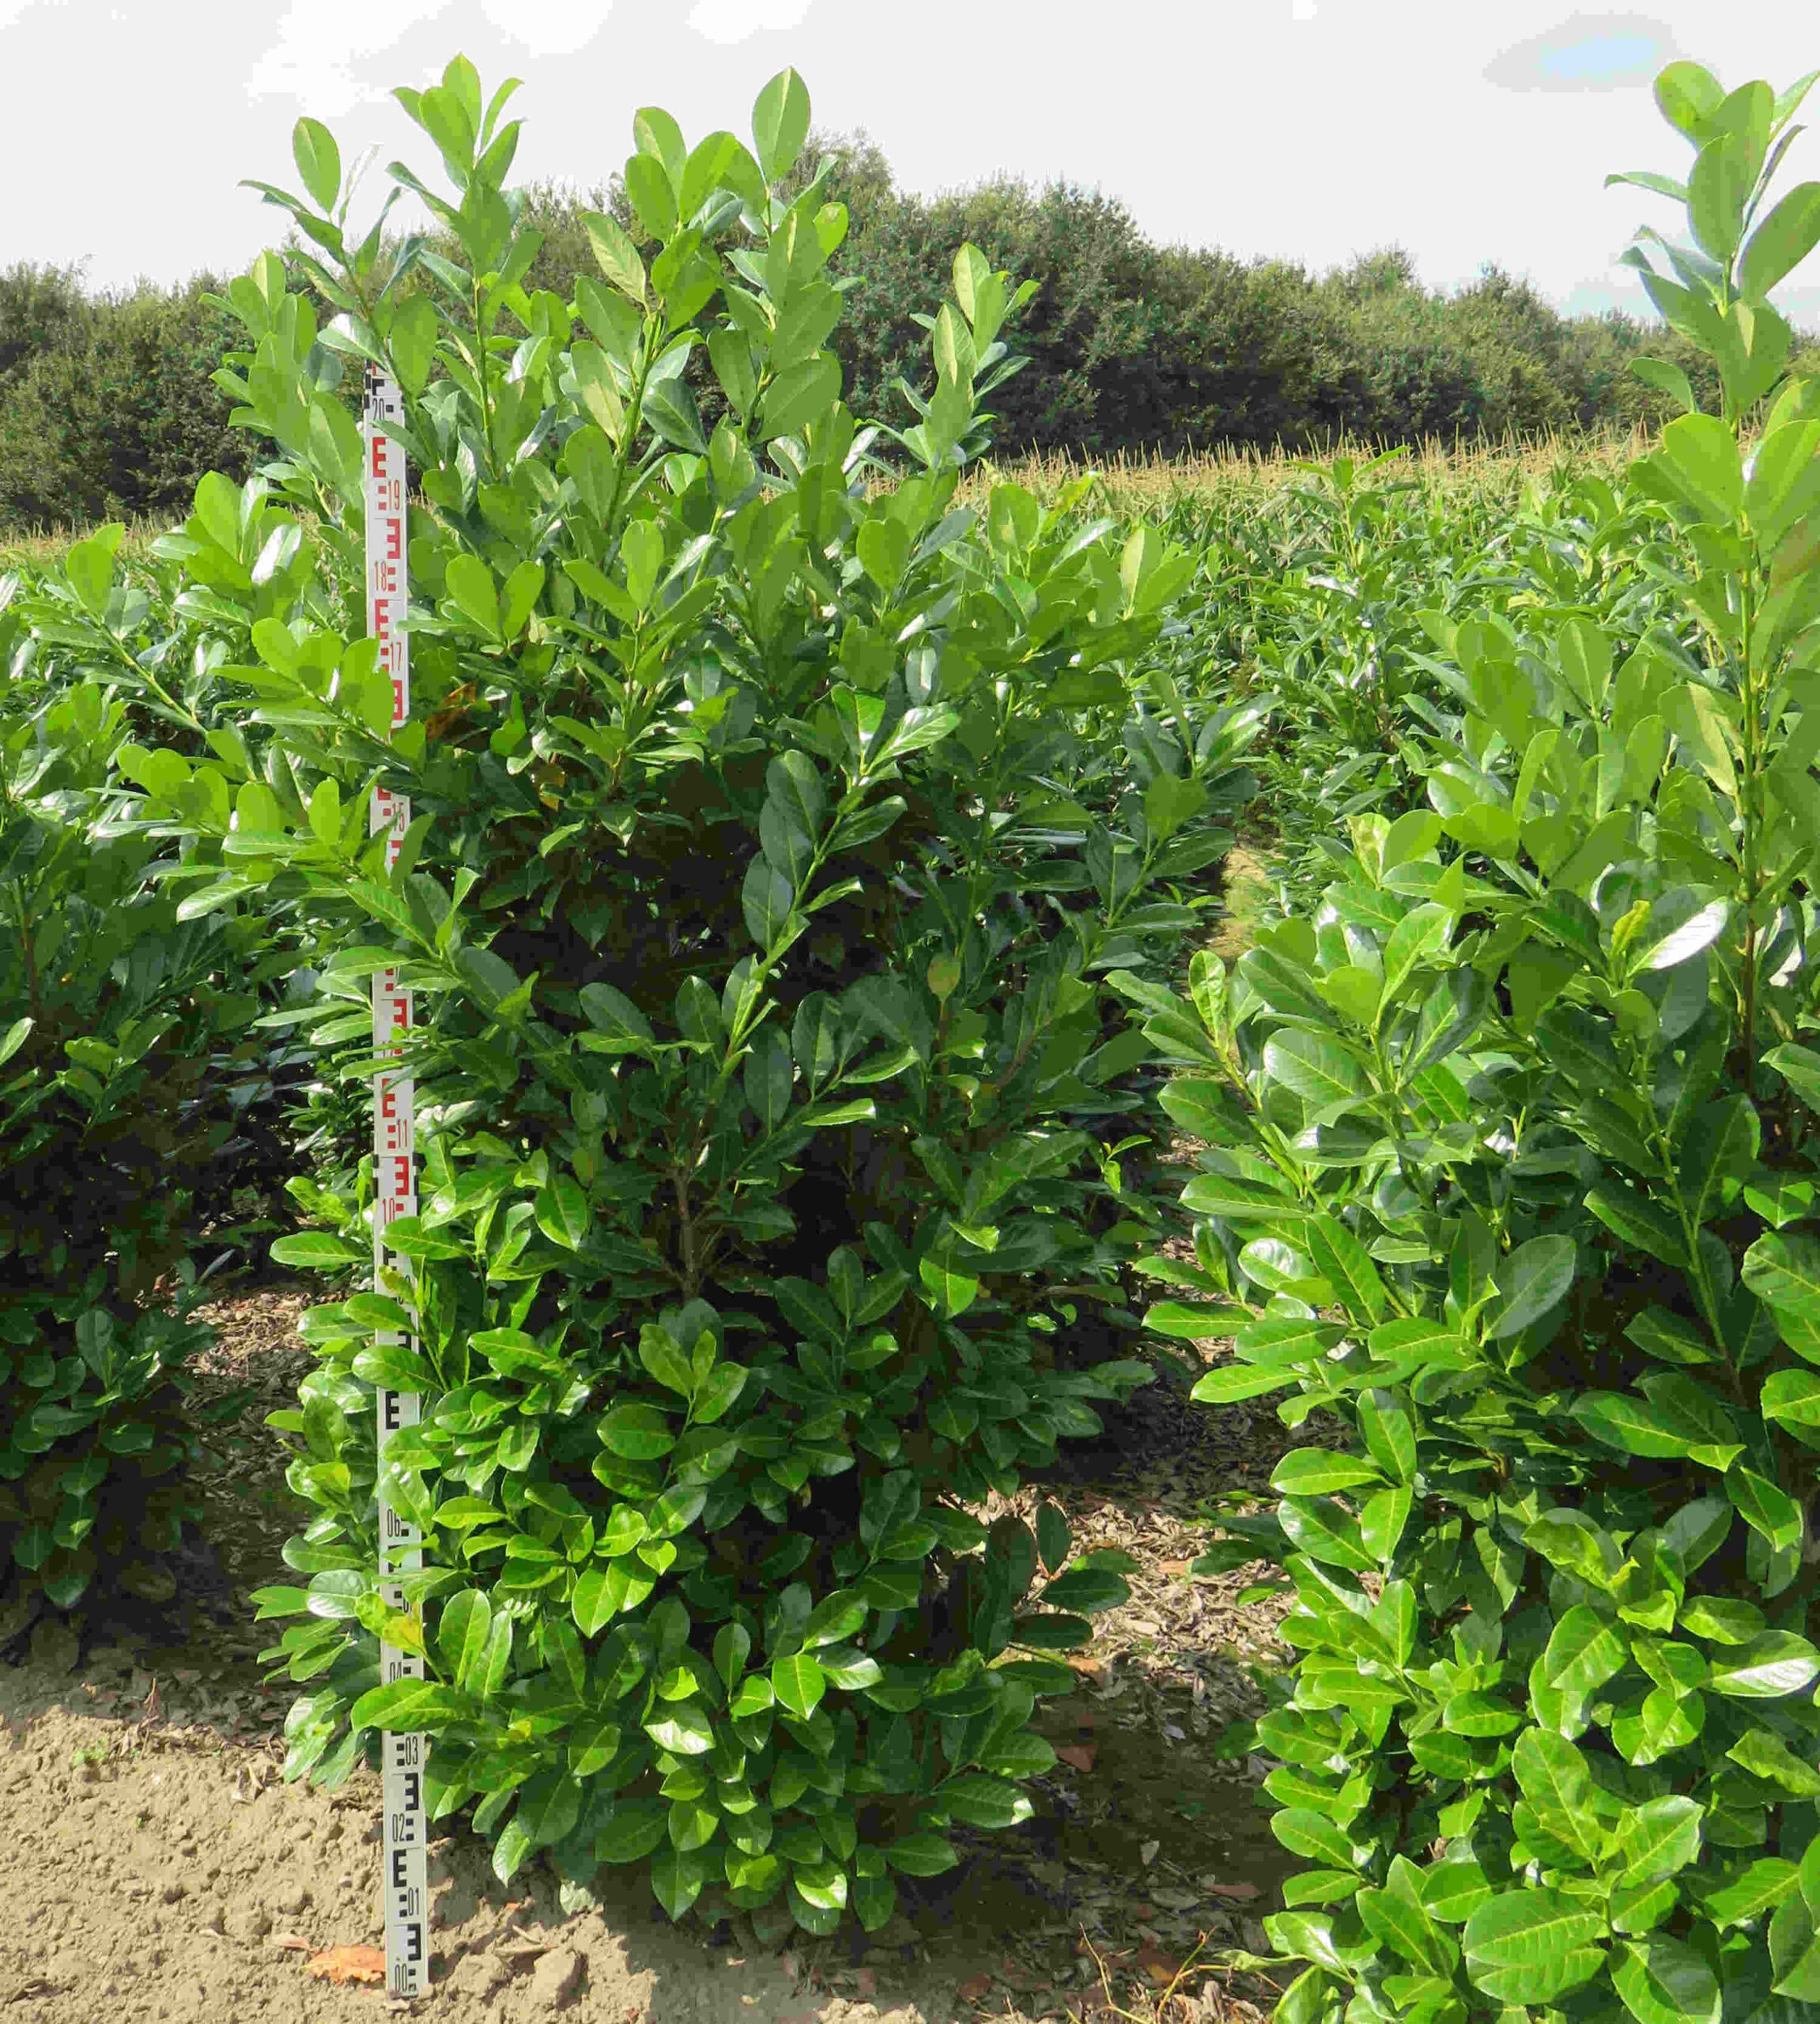 Laurier Rotundifolia Prunus laurocerasus ‘Rotundifolia’ kopen